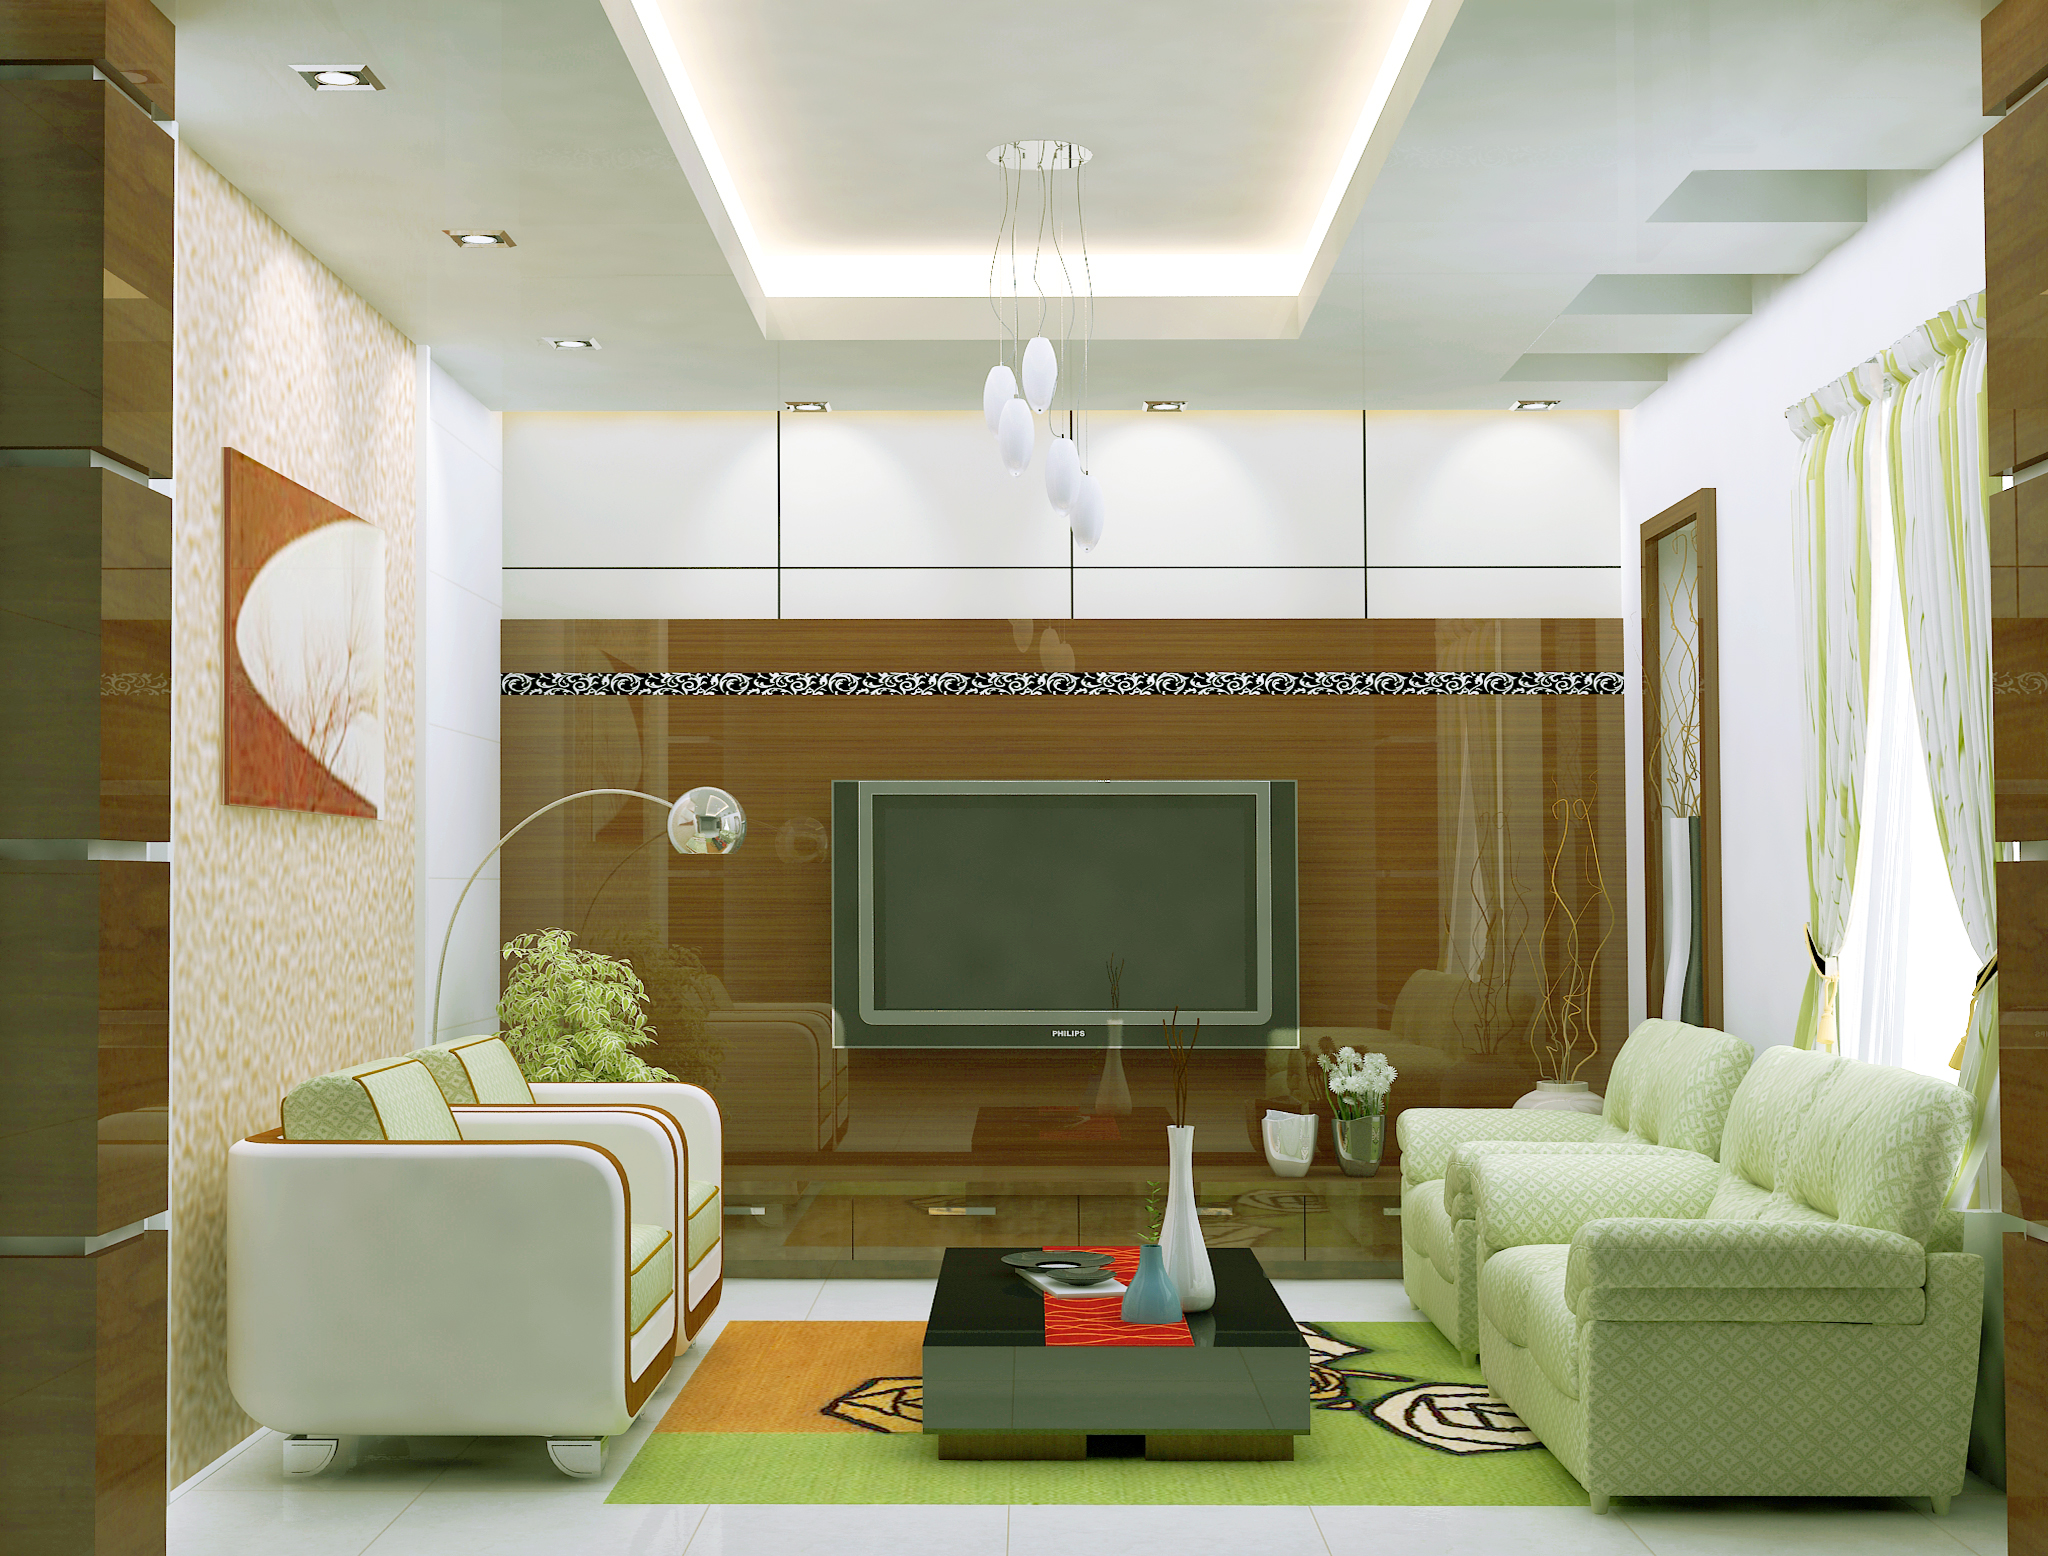 30 Best Interior Design Ideas – The WoW Style
